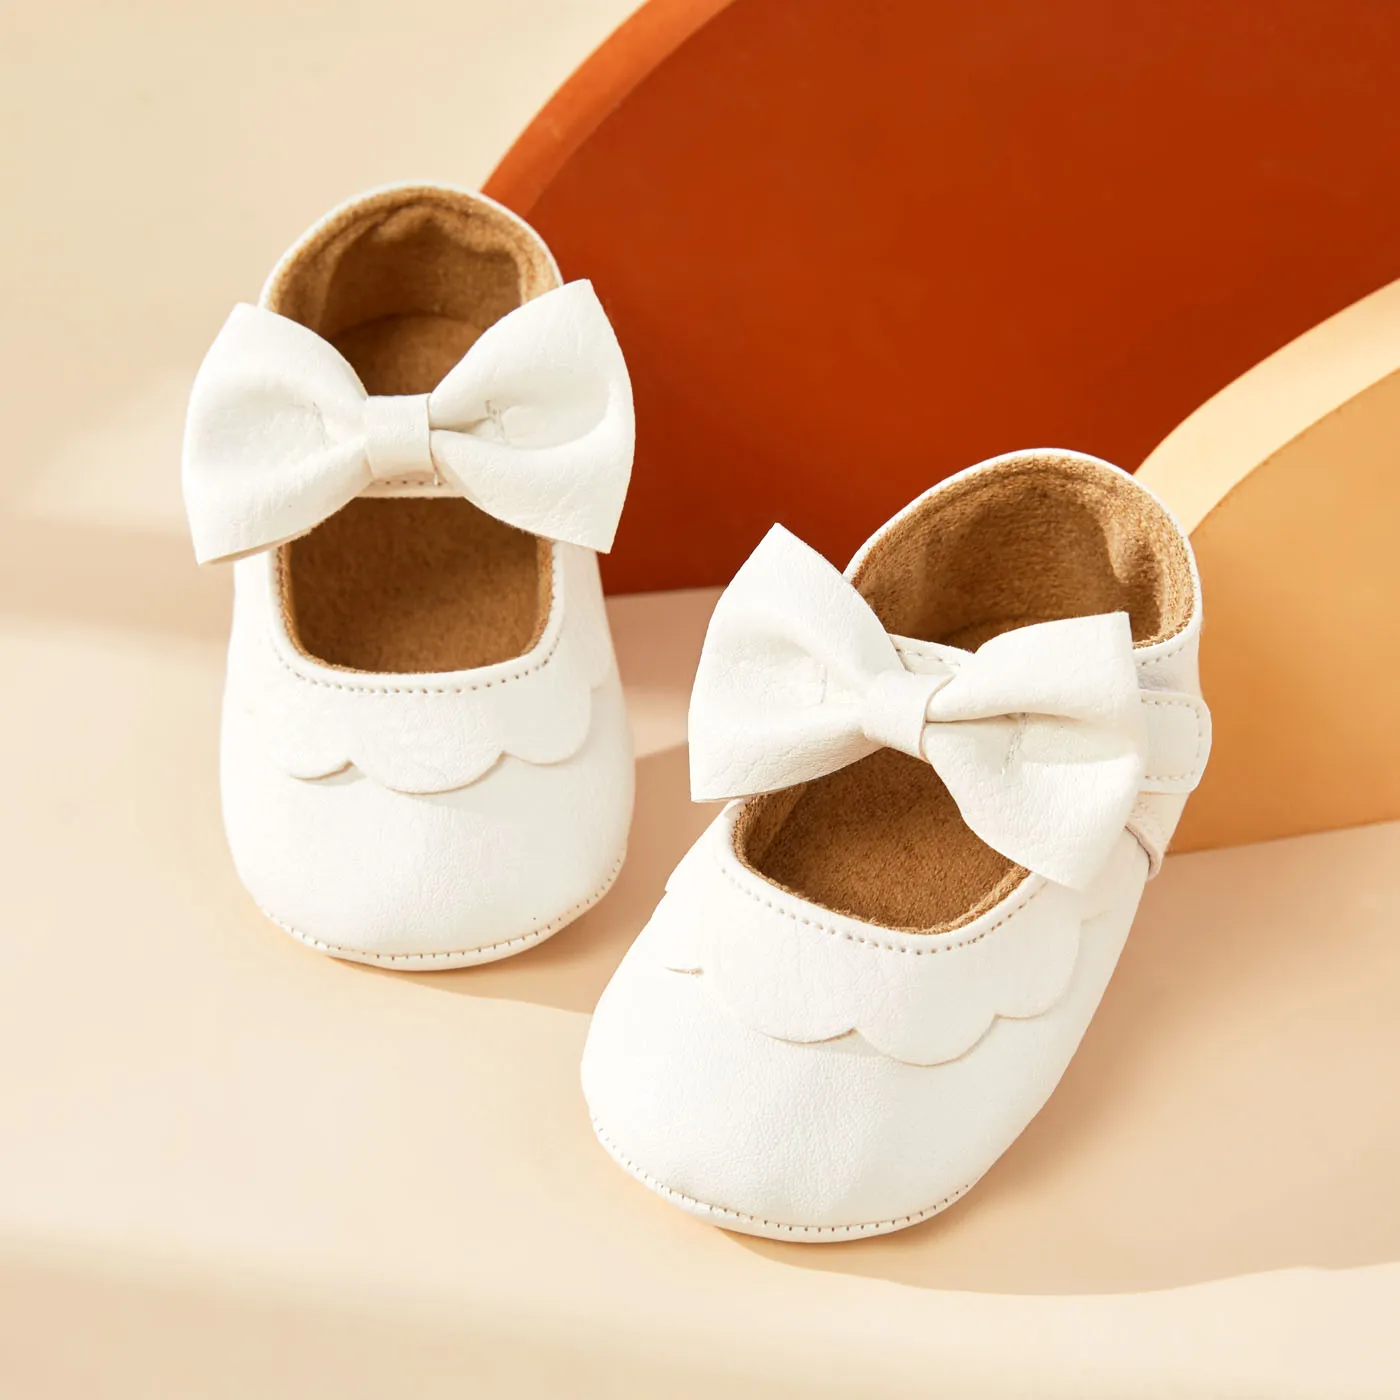 Baby Girl 2pcs Geometric Pattern Flutter Sleeve Jumpsuit And Headband Set/ Shoes